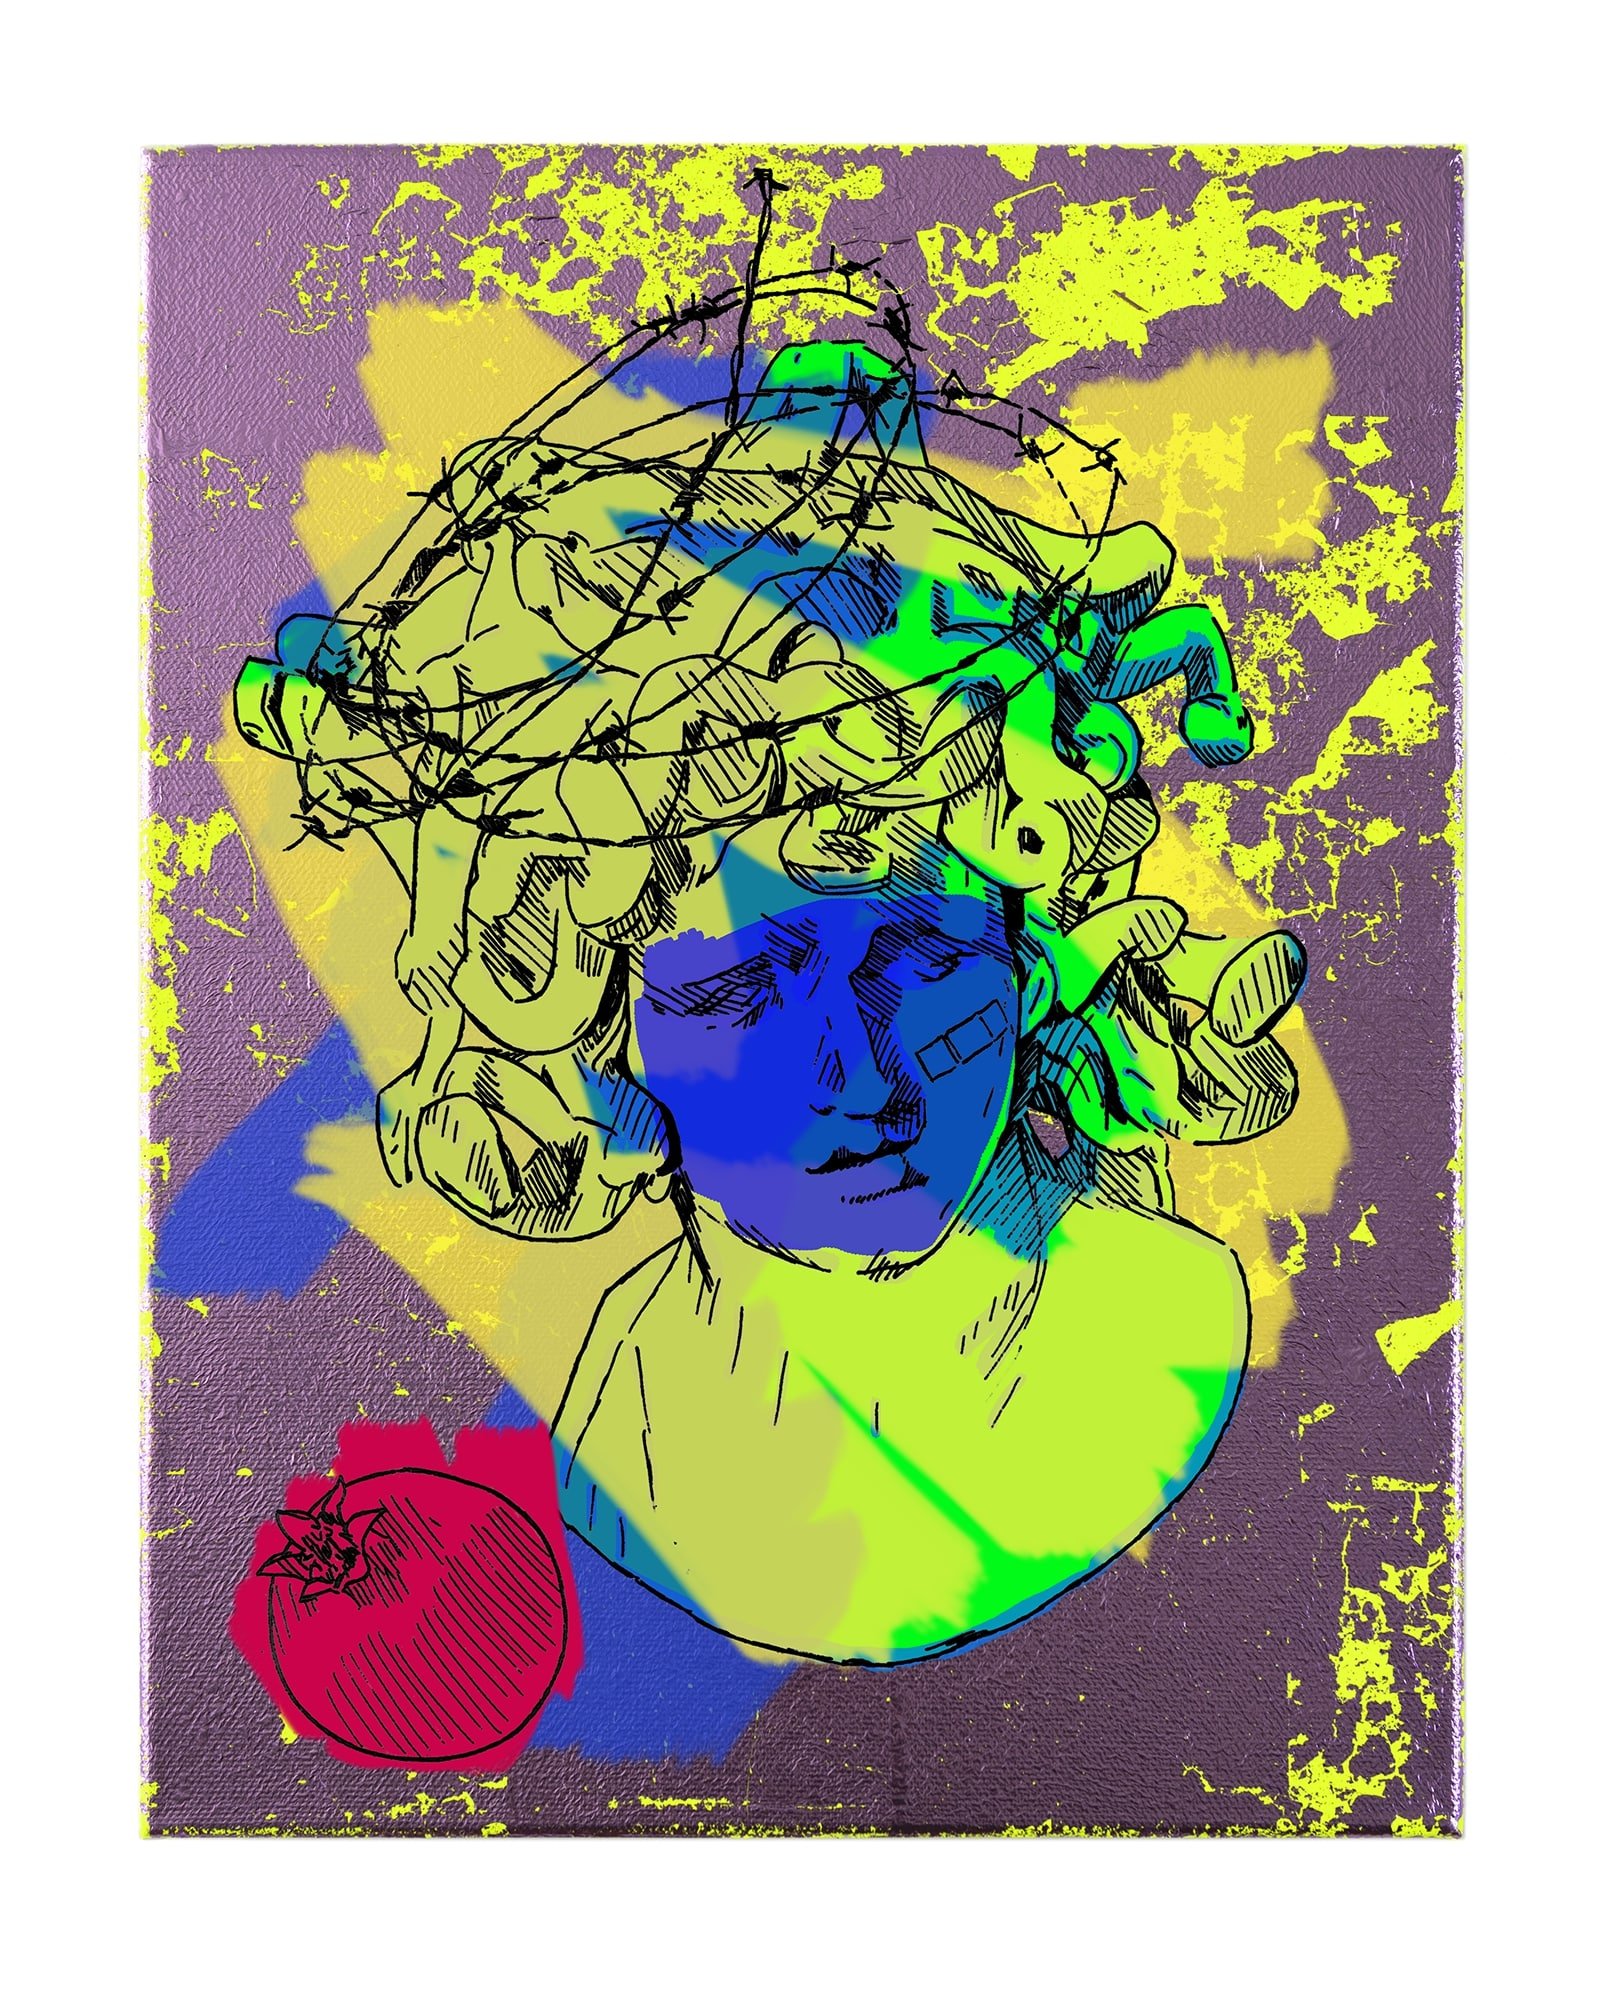 Mieke Marple's Medusa artwork for Artsy exhibition